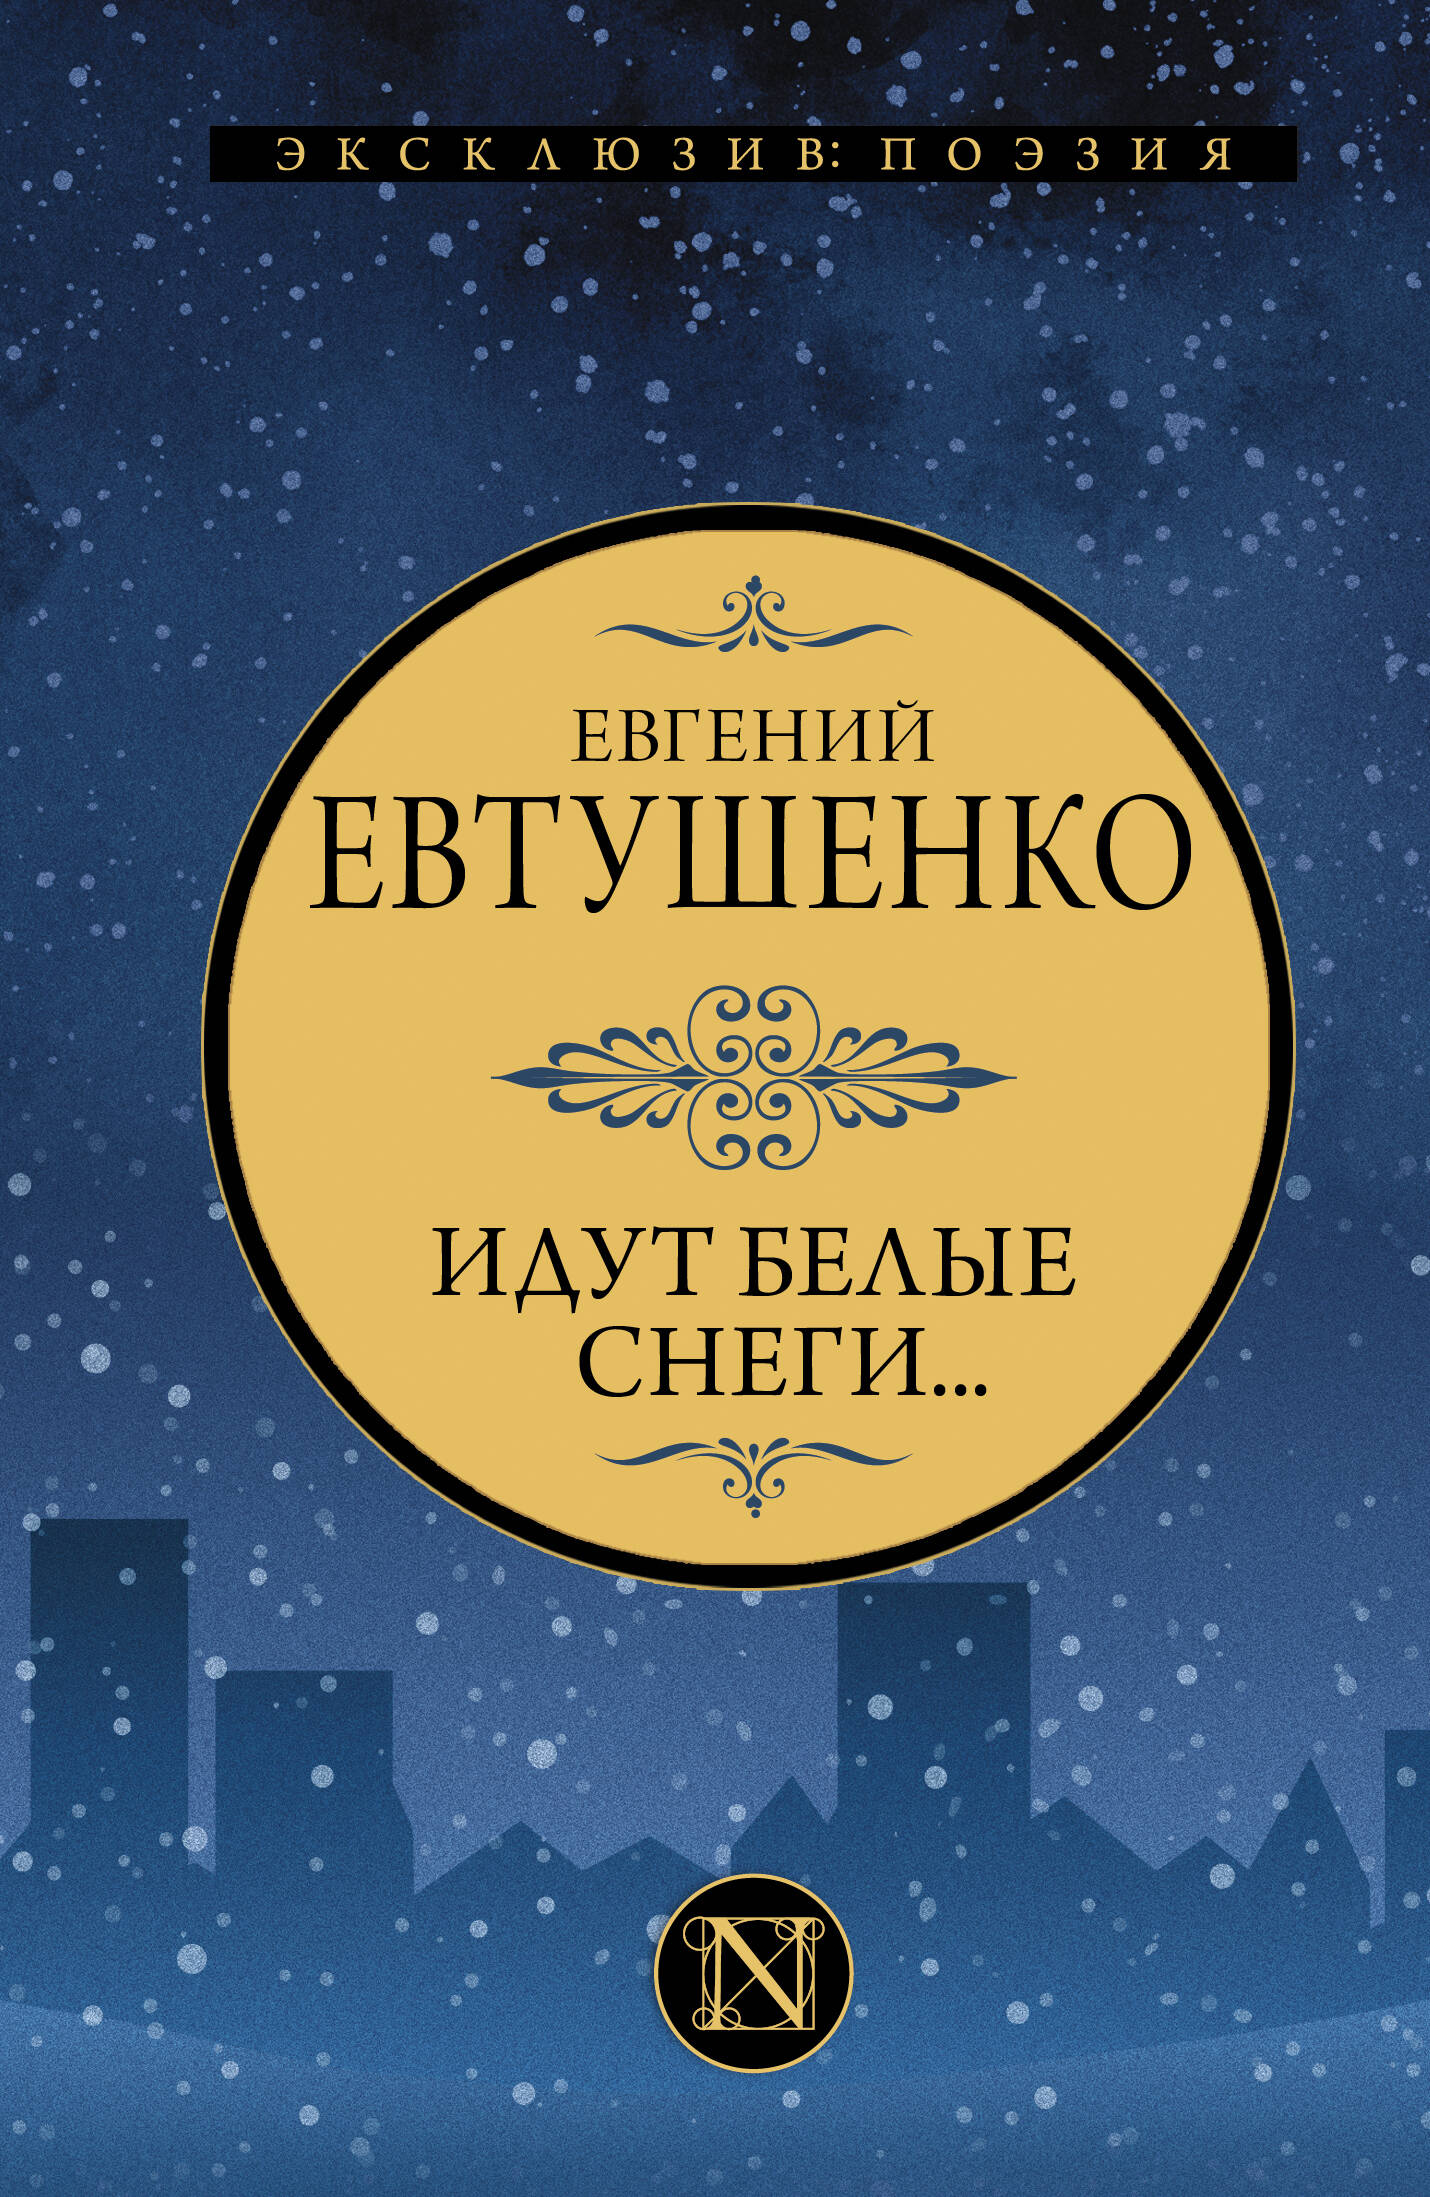 Евтушенко Евгений Александрович Идут белые снеги...: сборник стихотворений